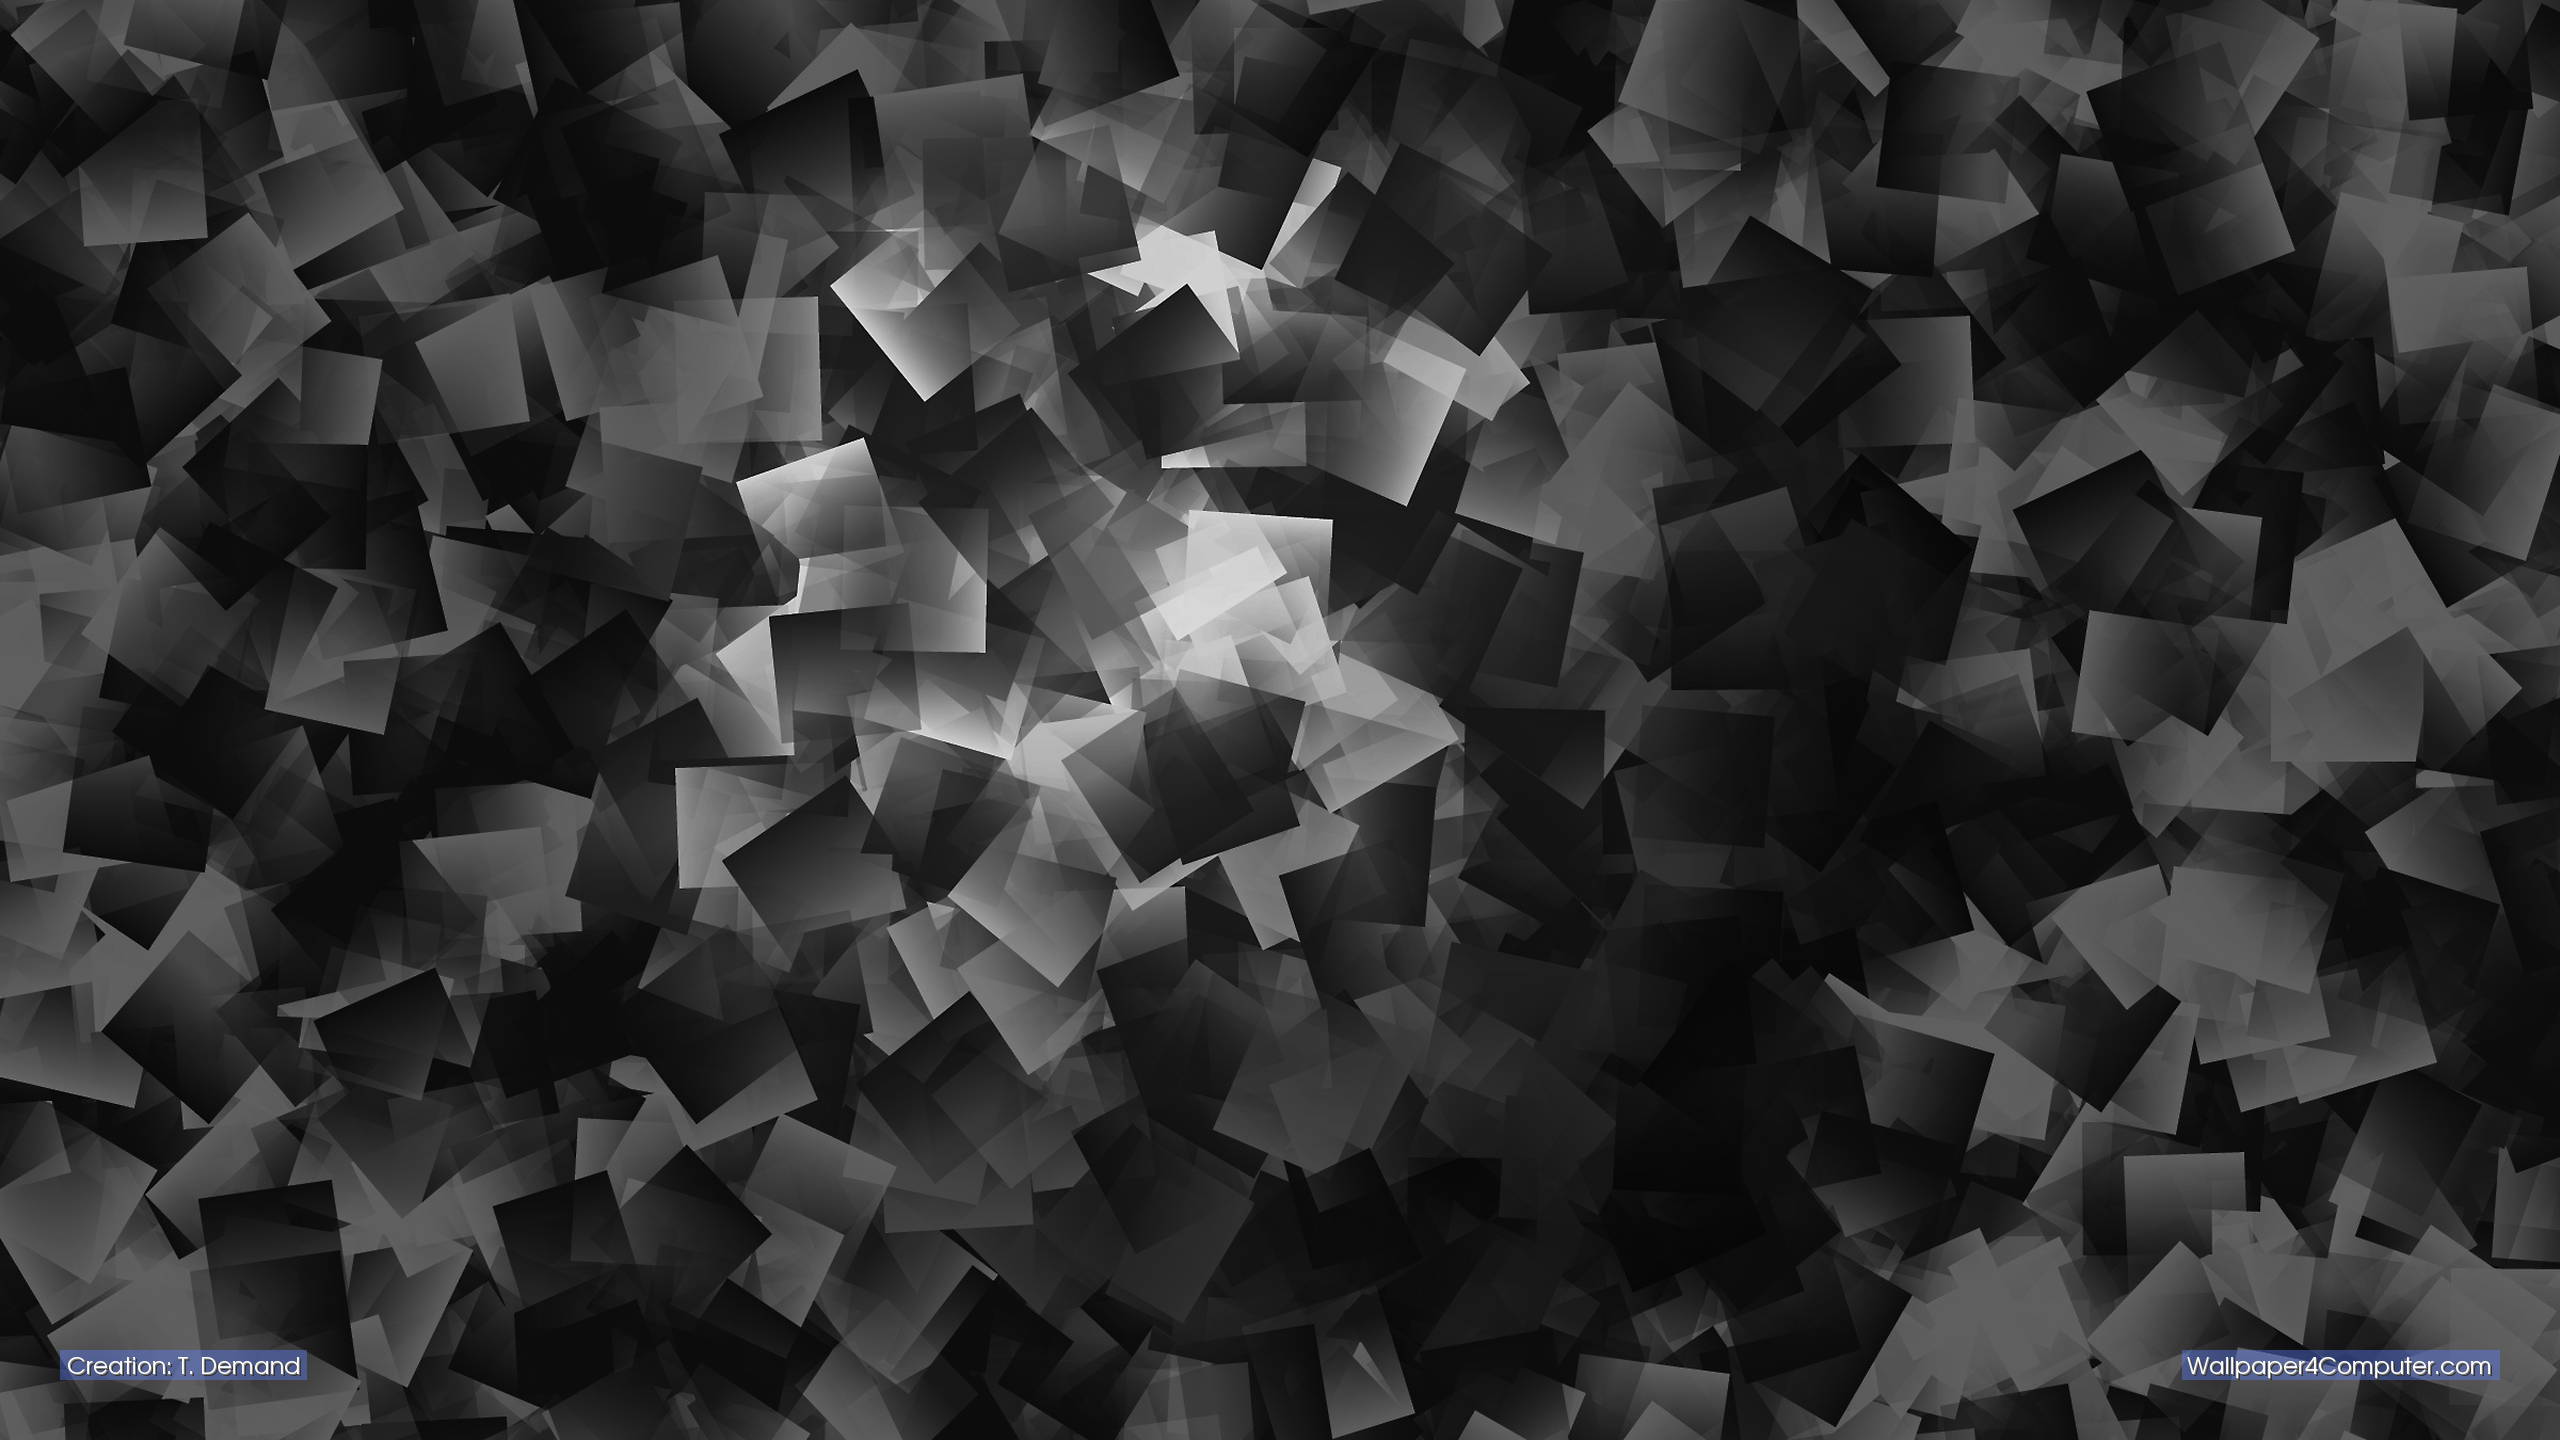 Wallpaper For Computer Best Black Cubism 2560 X 1440 Pixels